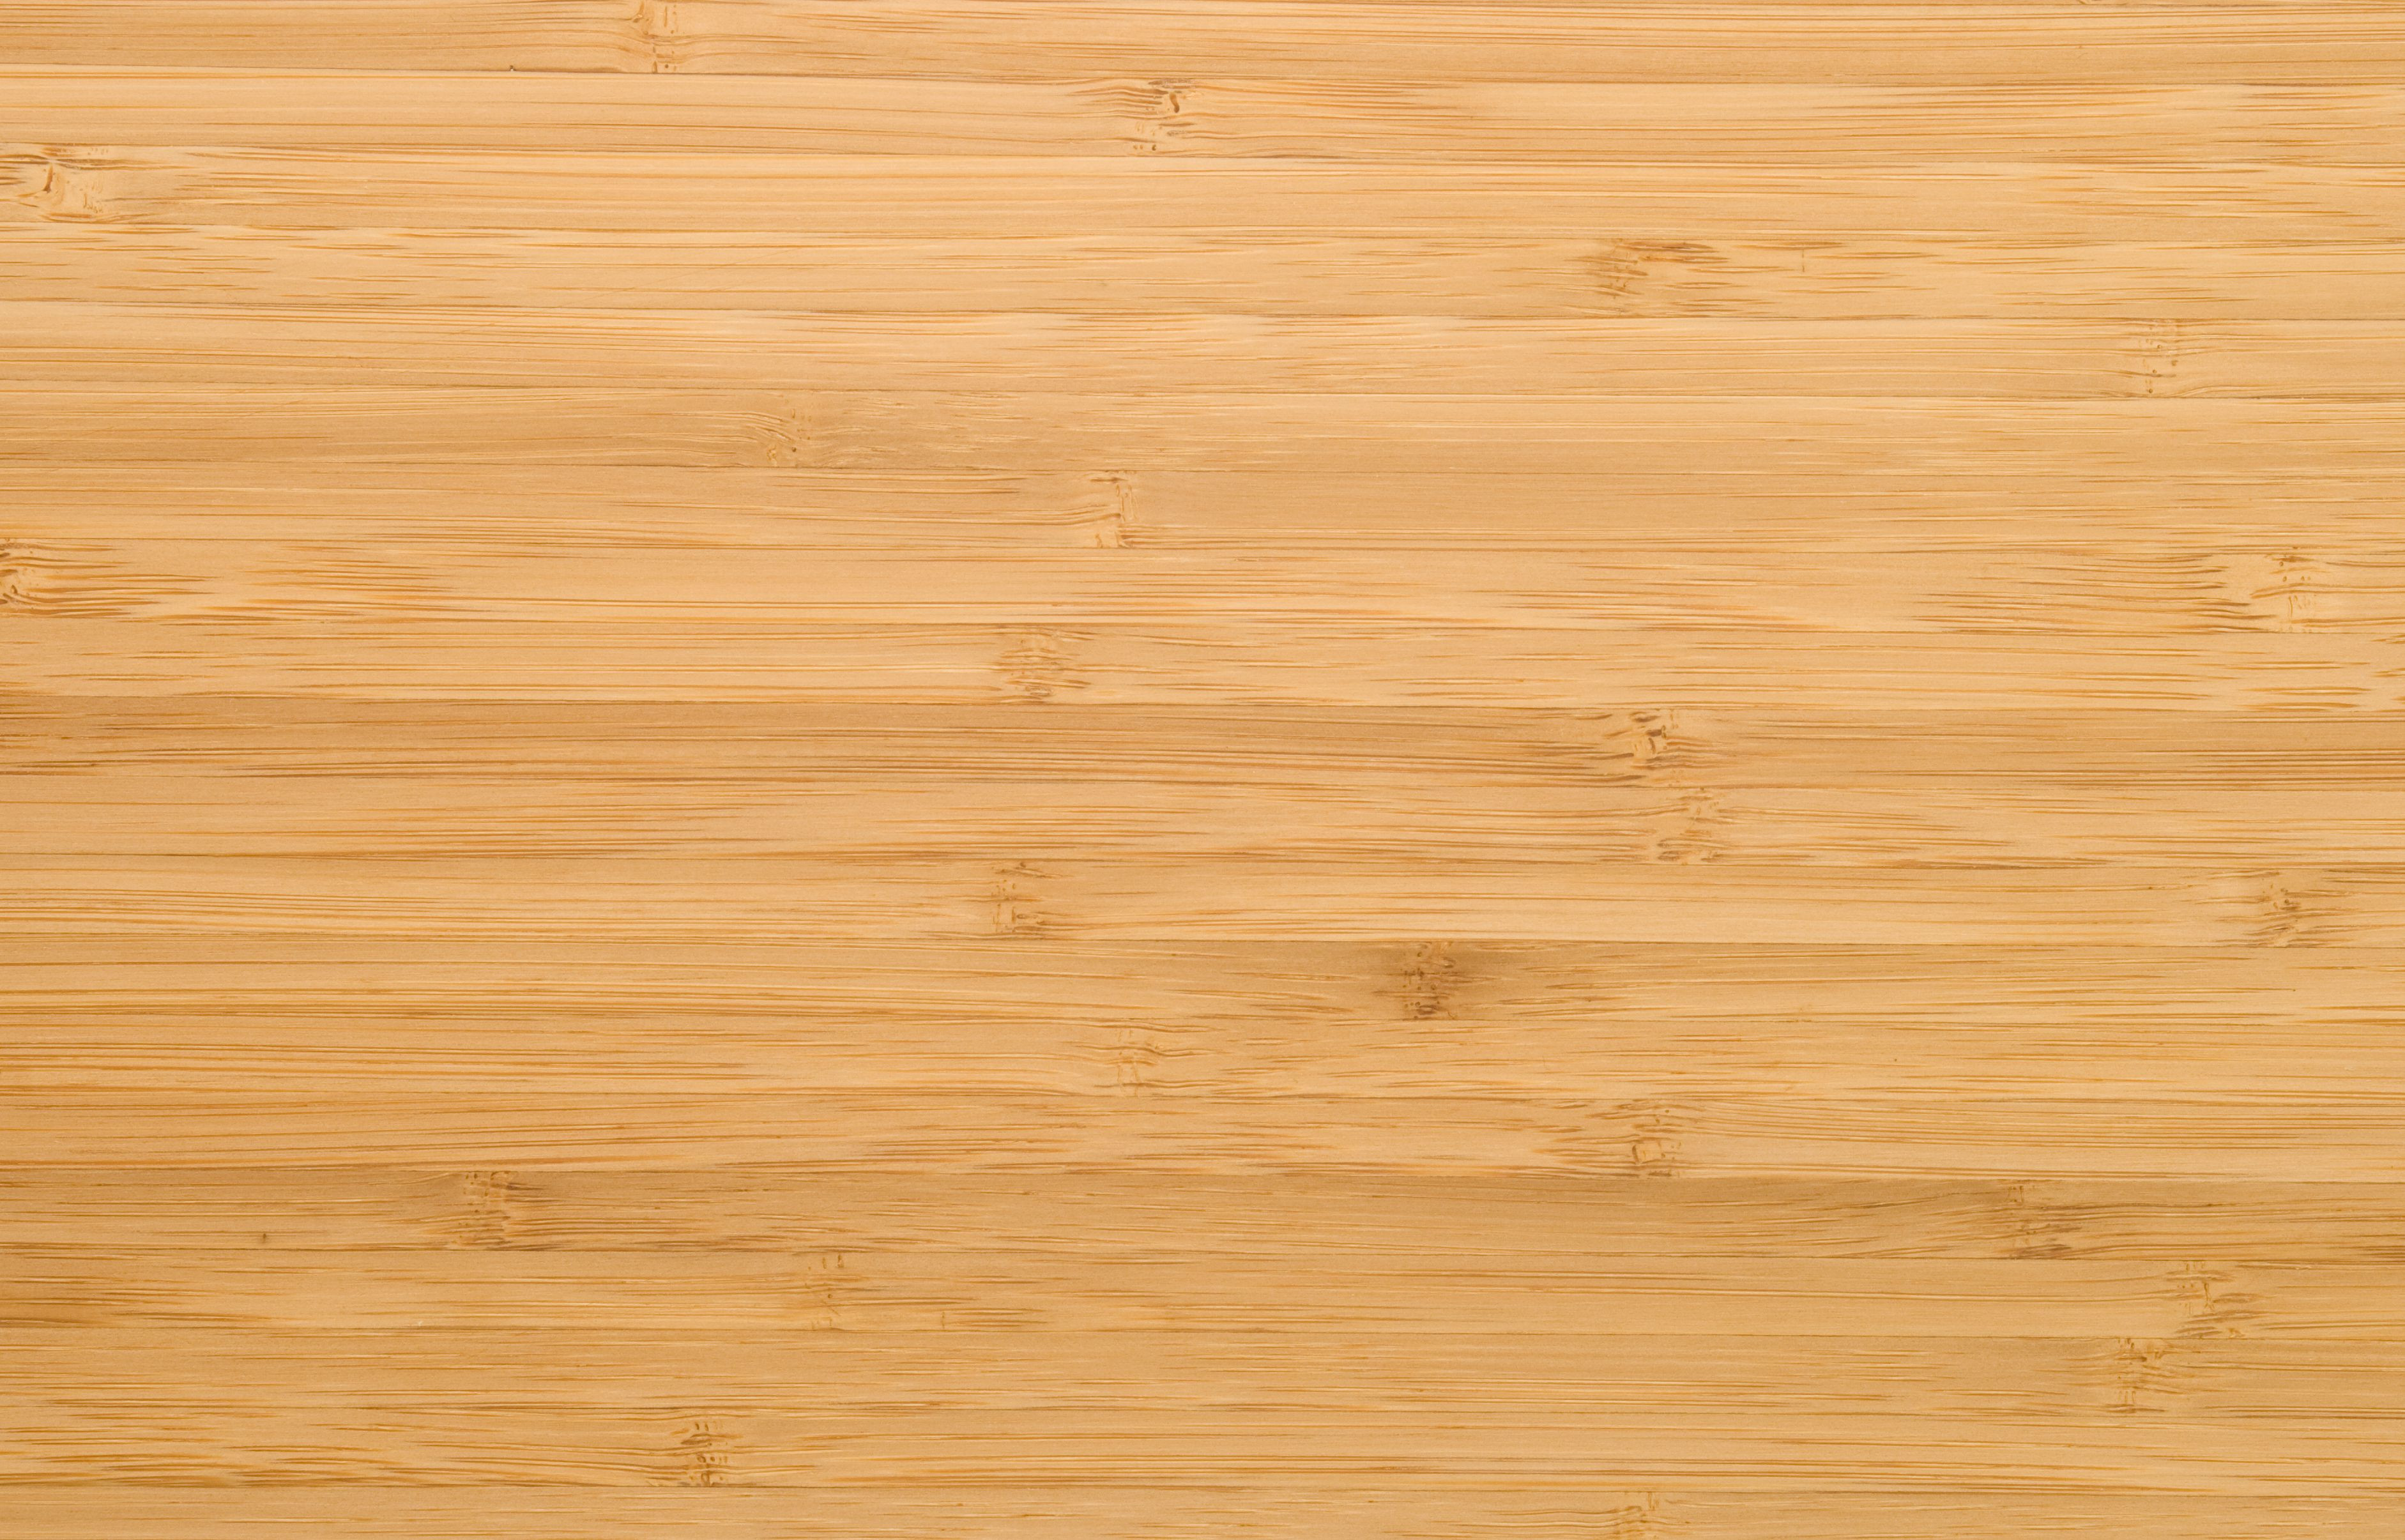 13 attractive Strand Woven Bamboo Flooring Vs Hardwood 2024 free download strand woven bamboo flooring vs hardwood of can you use a wet mop on bamboo floors regarding natural bamboo plank 94259870 59aeefd4519de20010d5c648